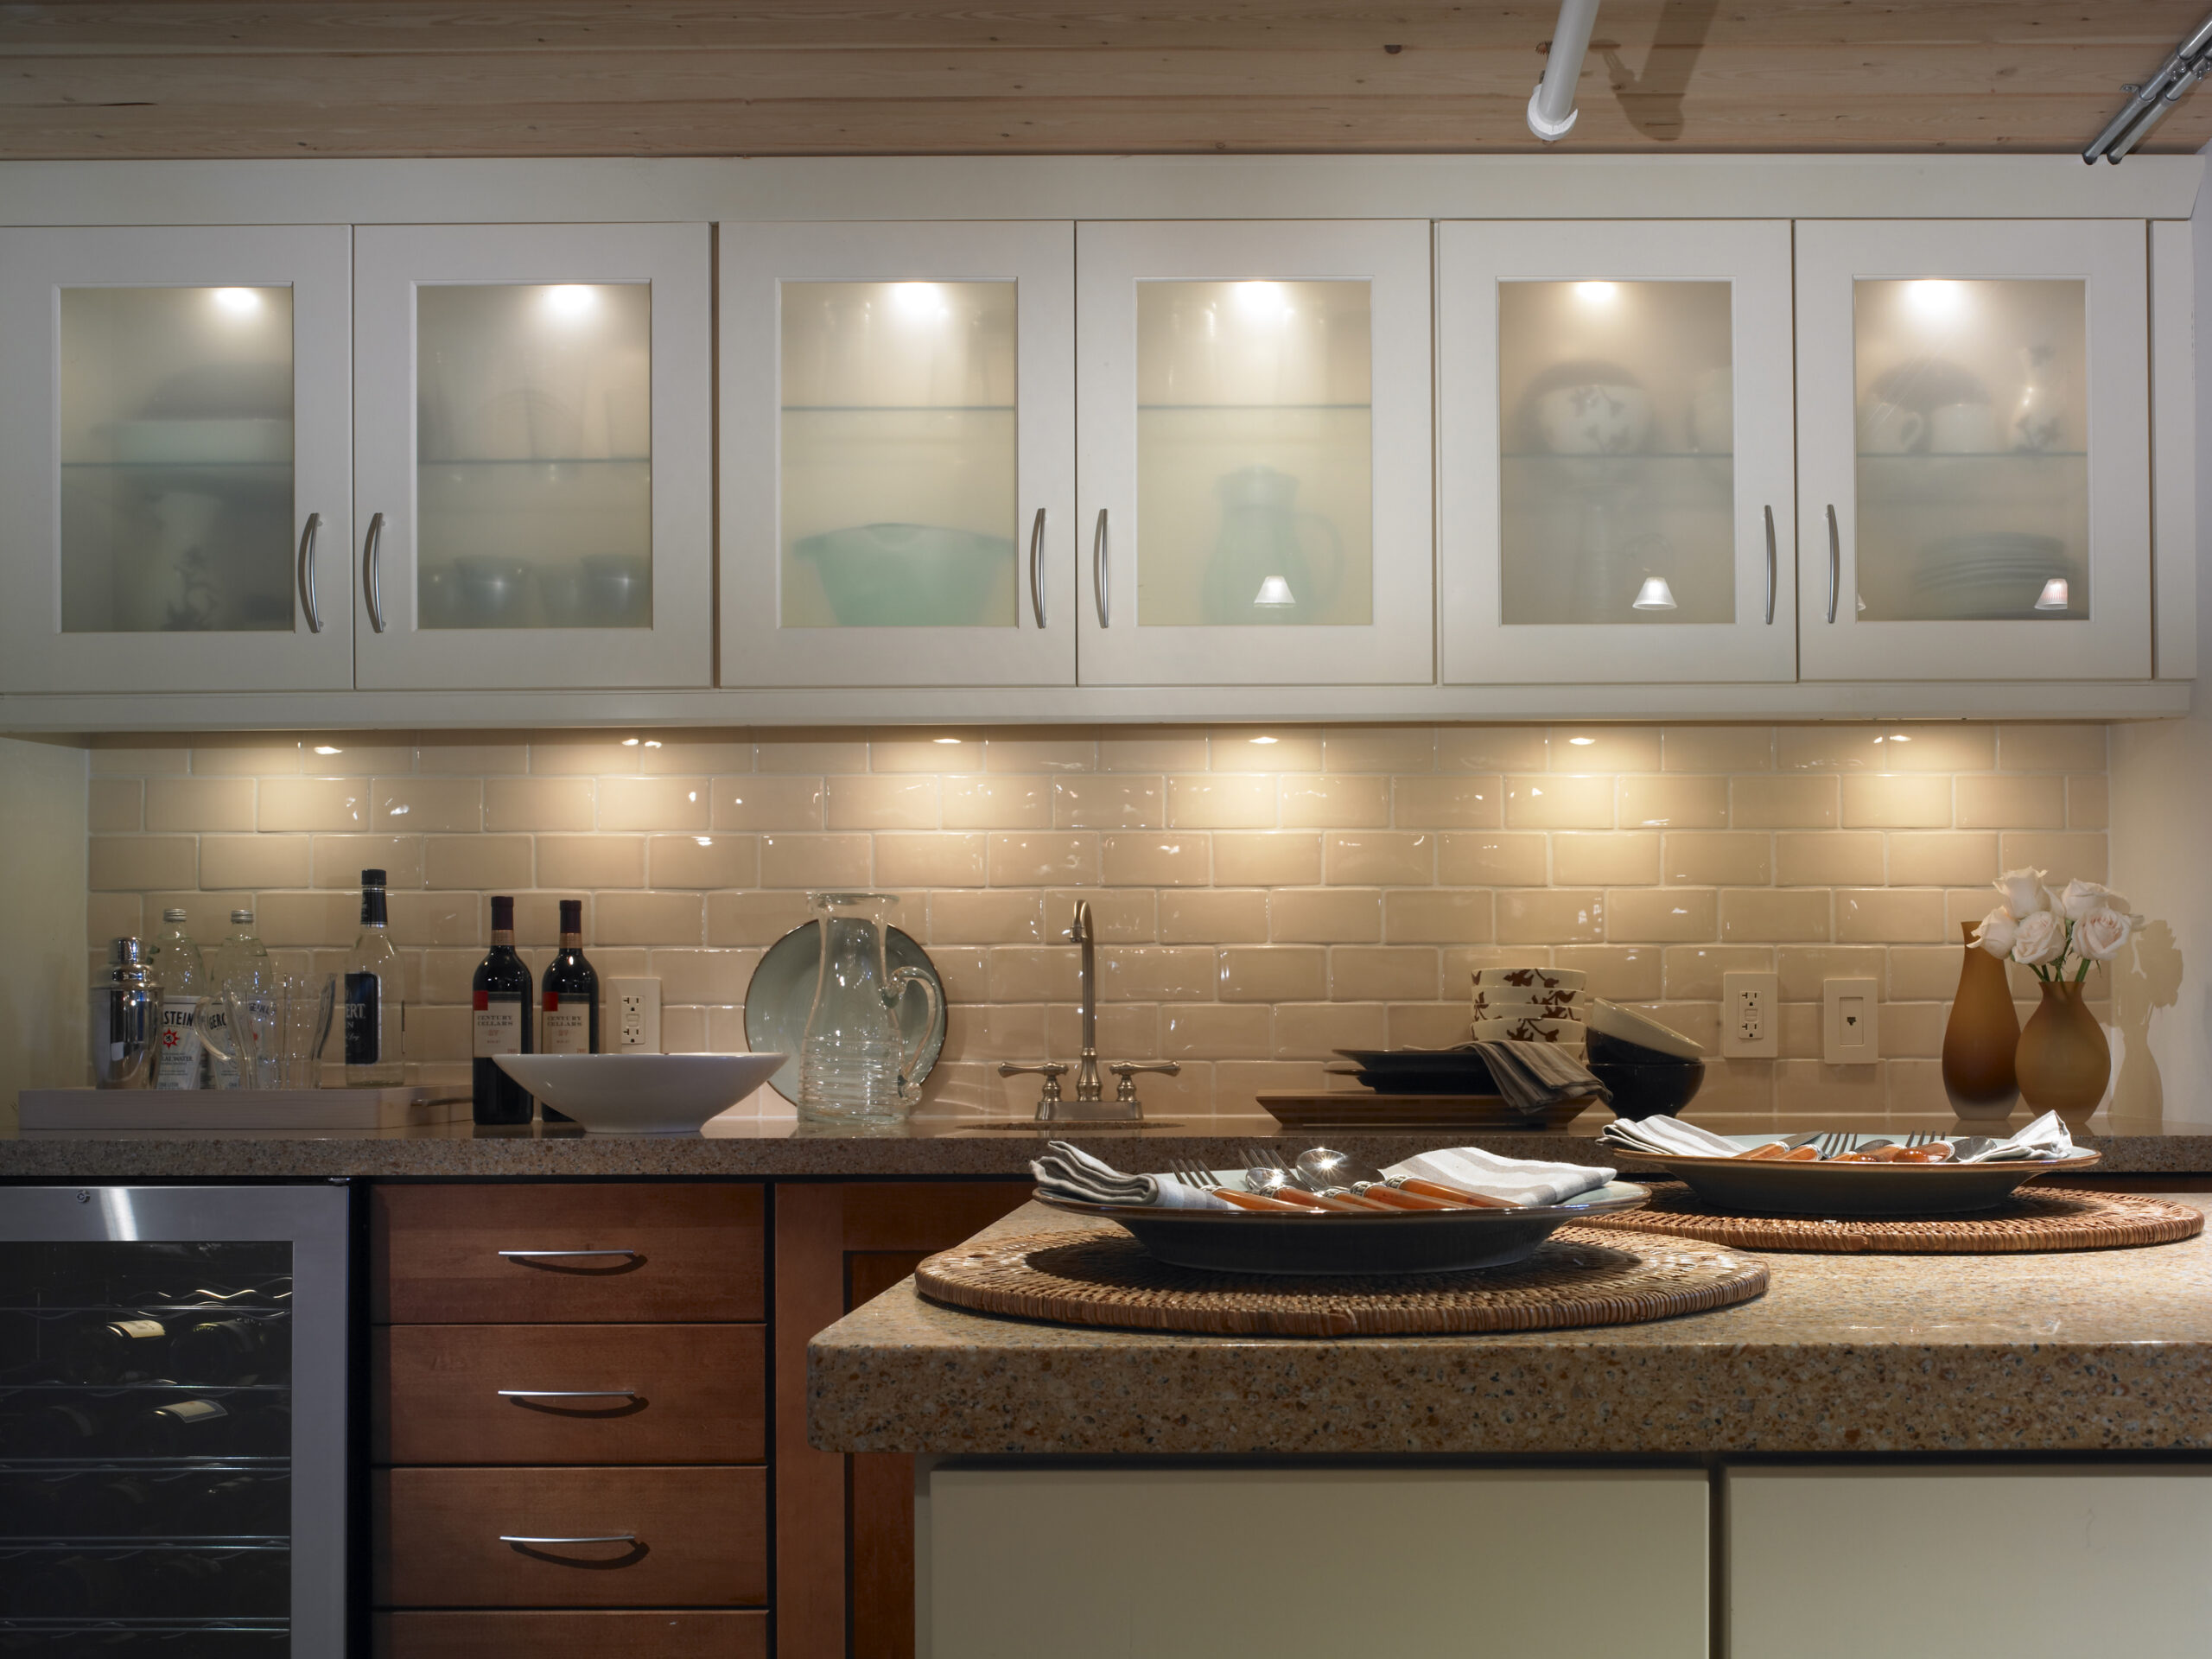 Kitchen with lighting design